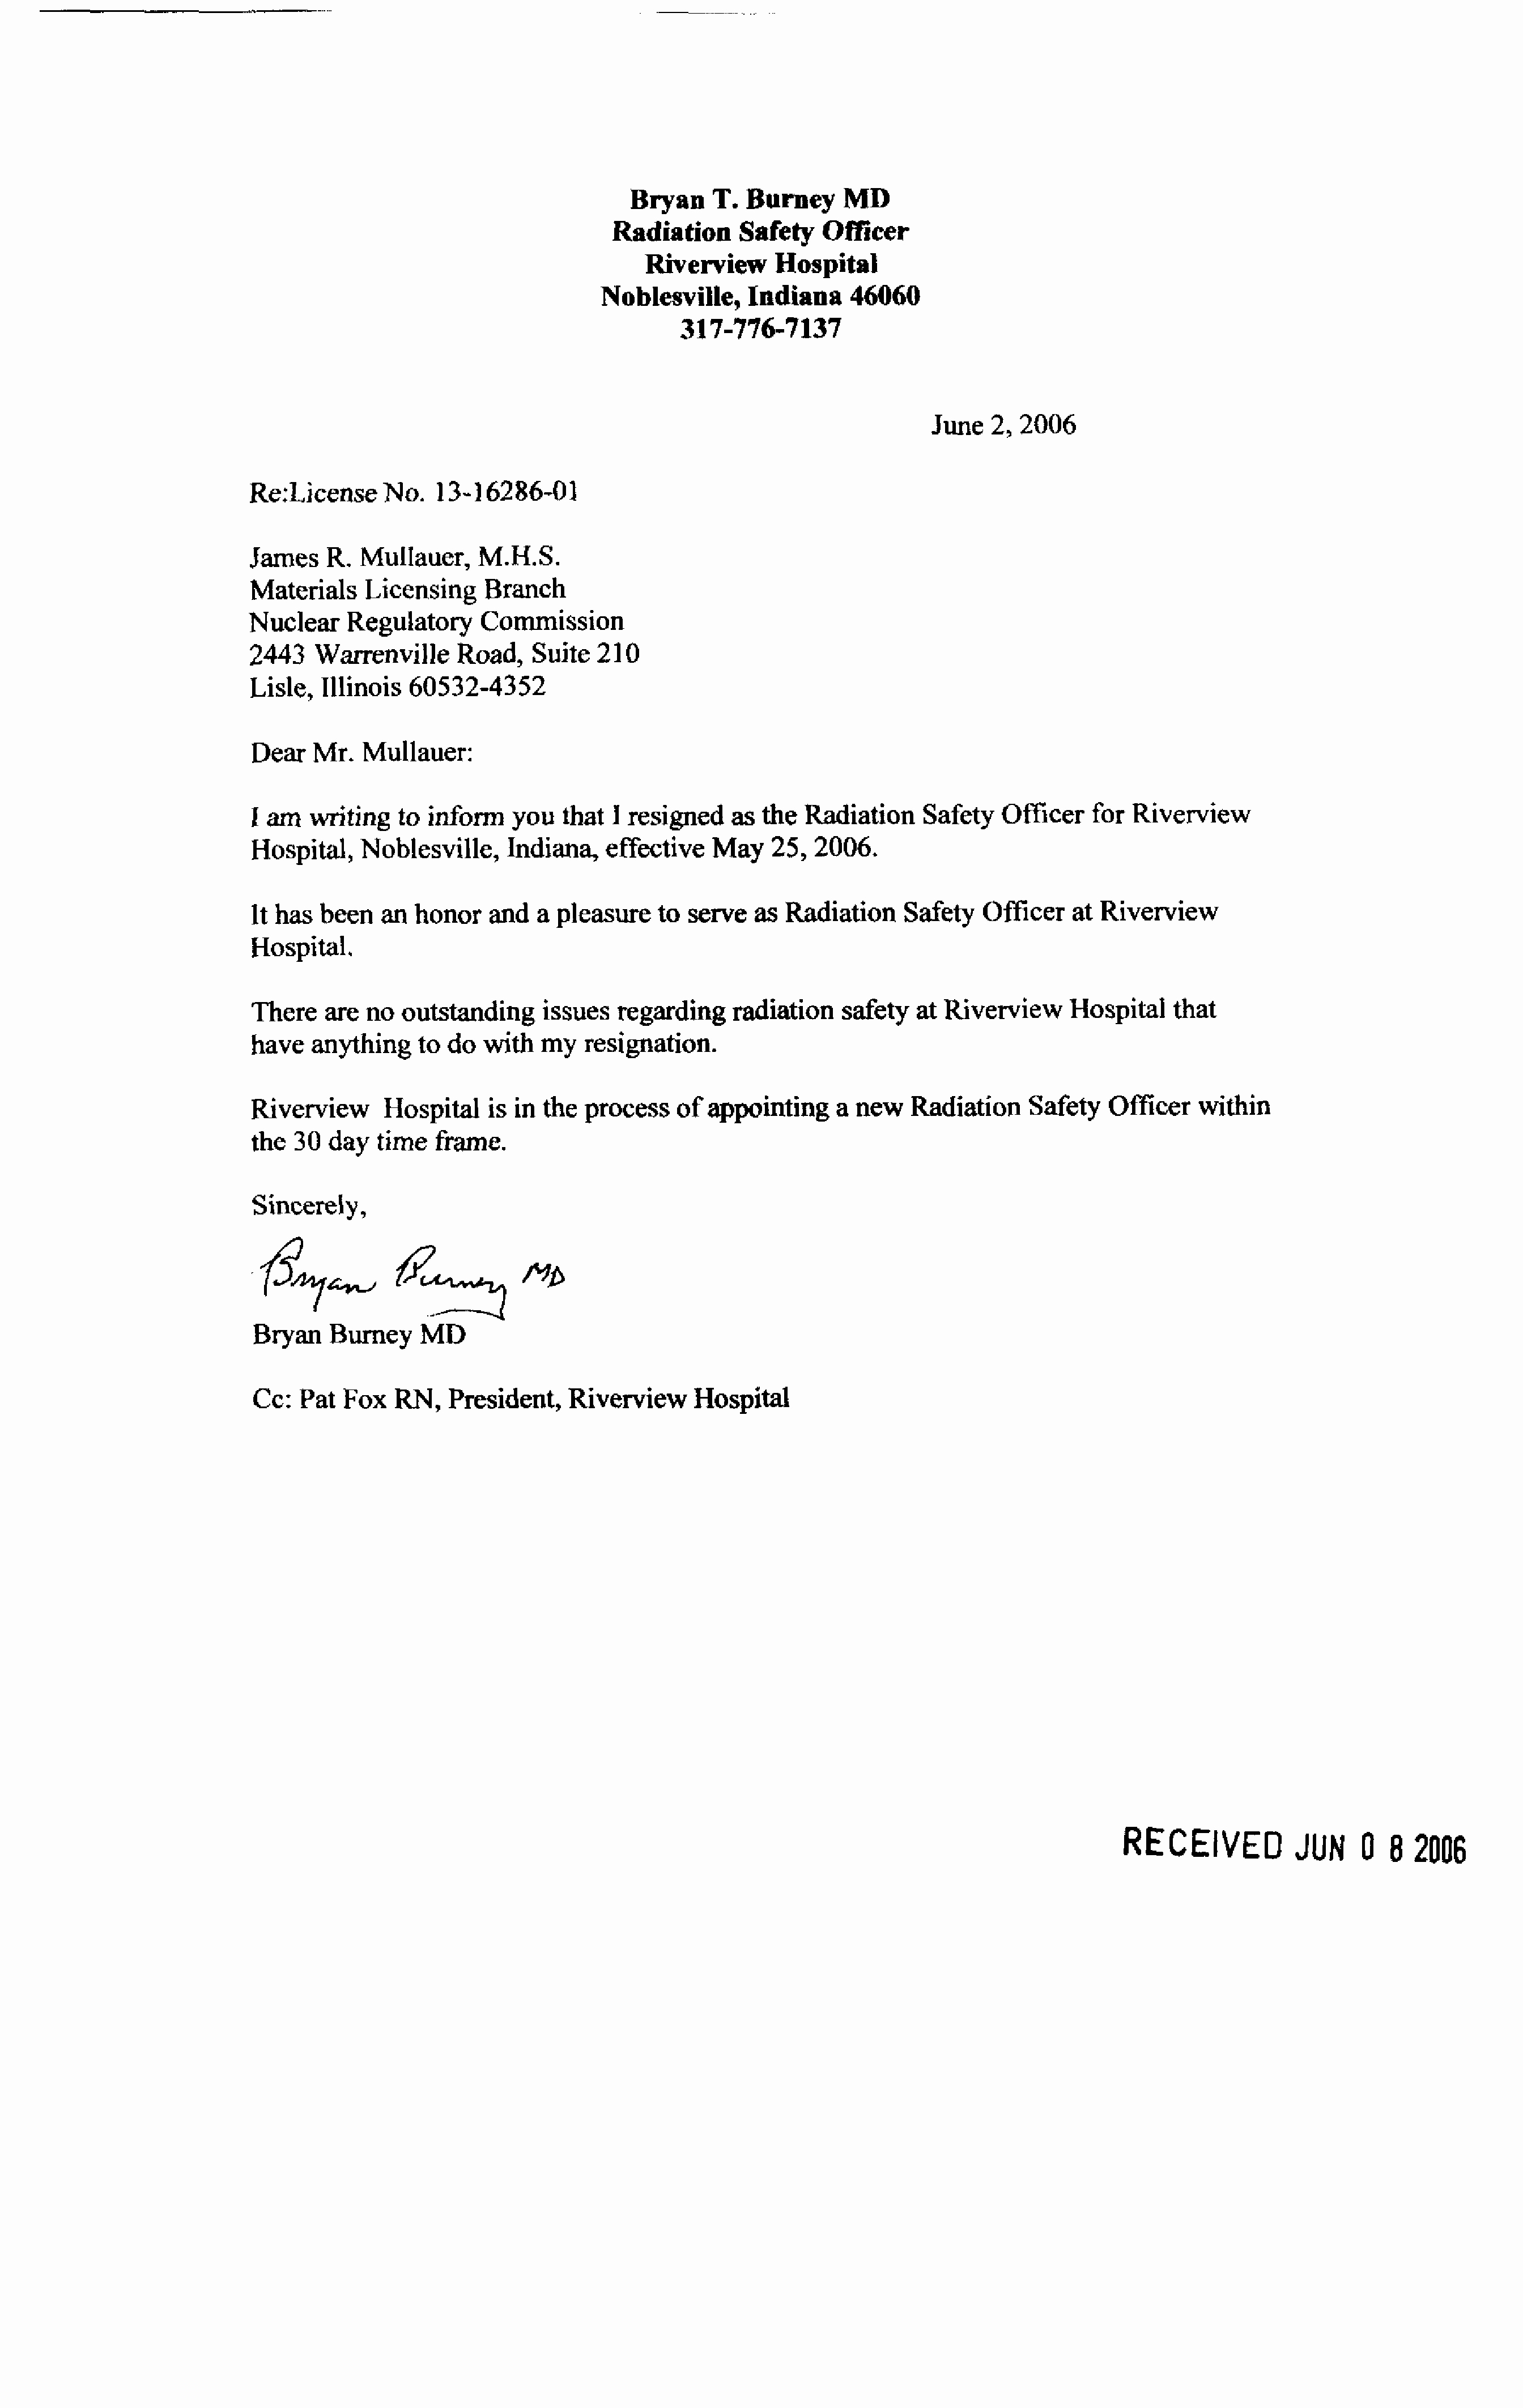 Corporate Officer Resignation Letter New Radiation Safety Ficer Resignation Letter